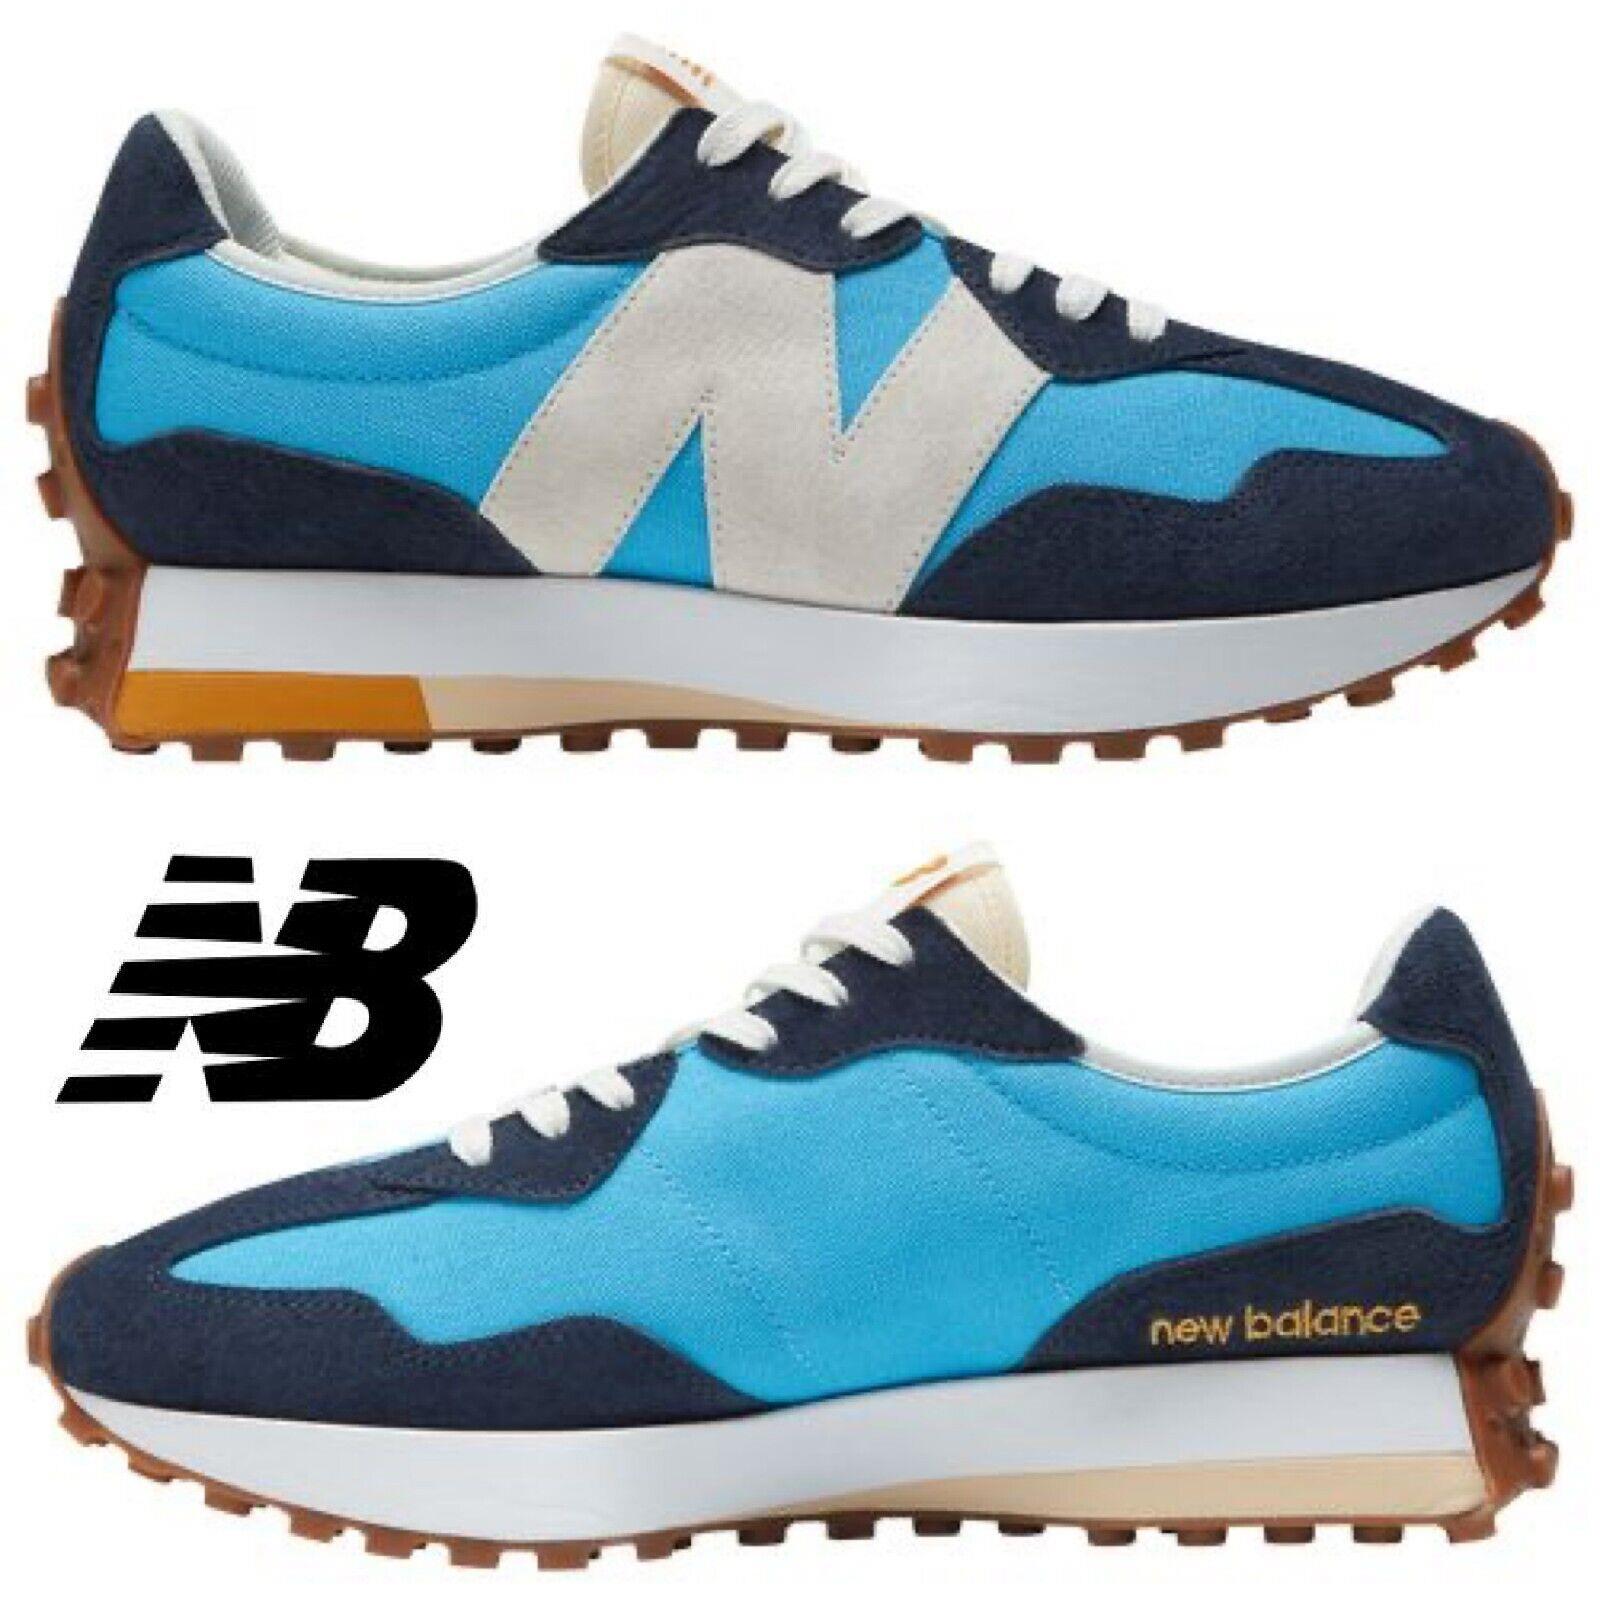 Balance 327 Men`s Sneakers Casual Shoes Running Premium Comfort Sport